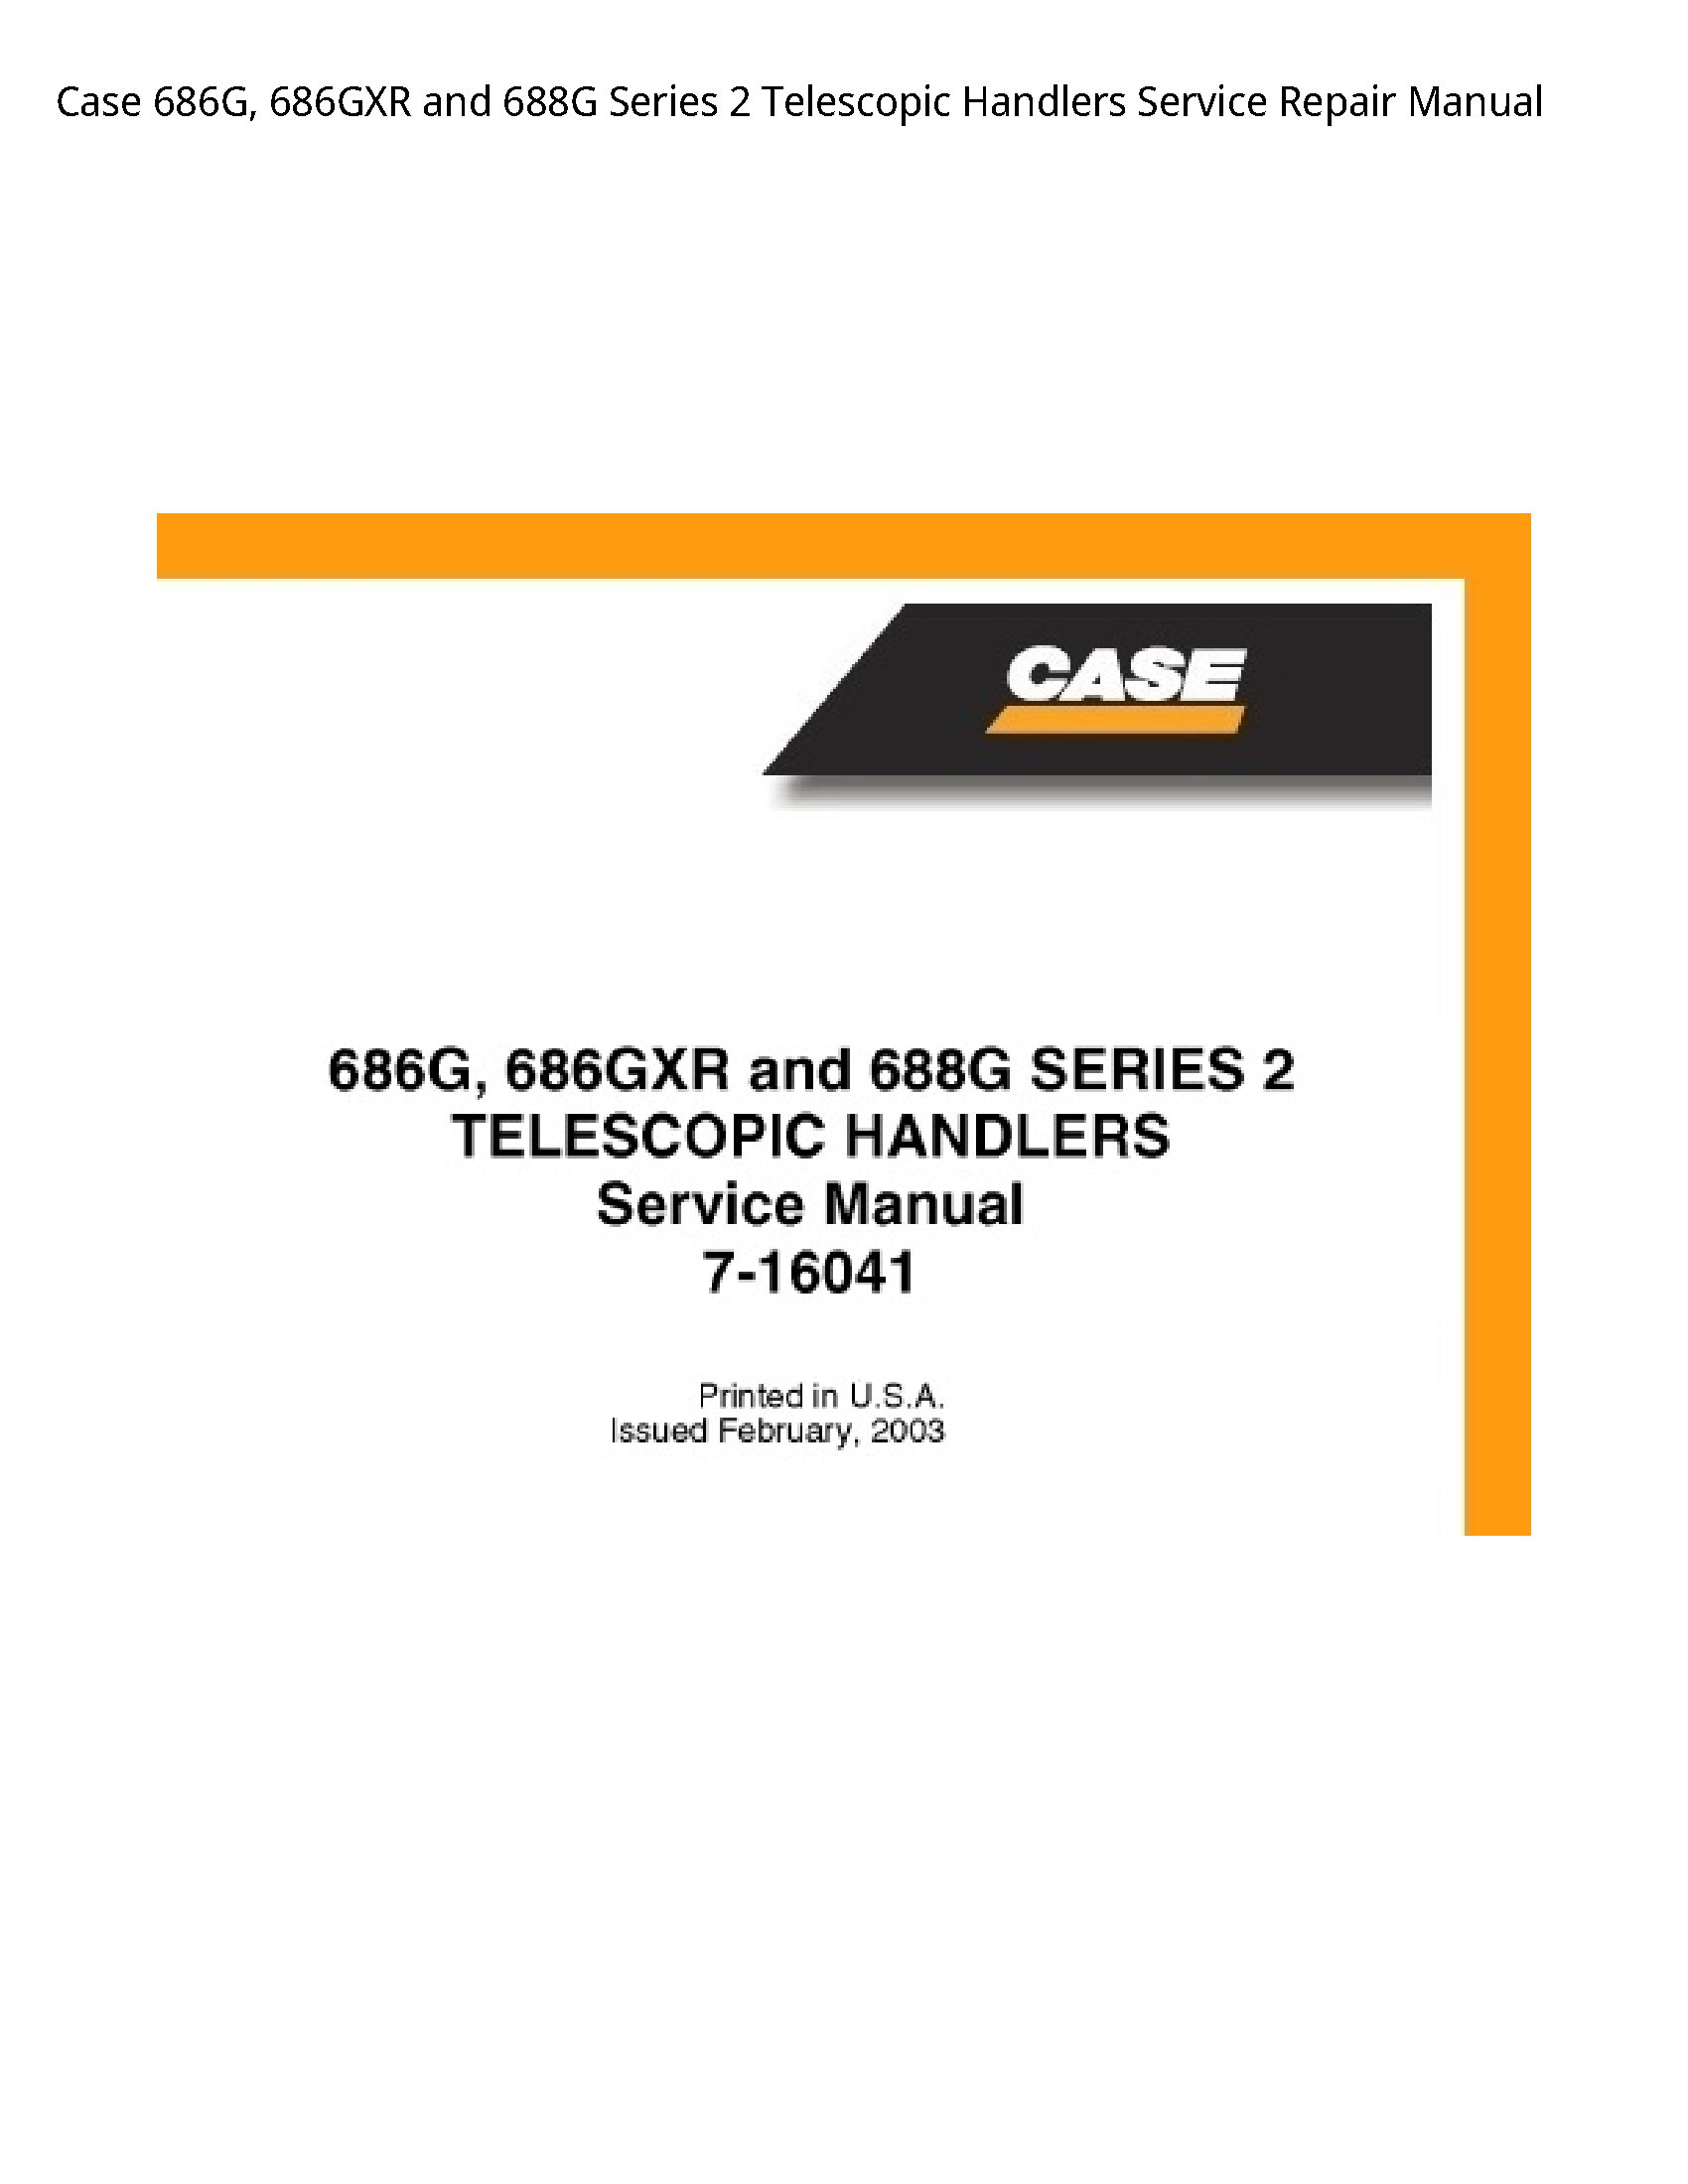 Case/Case IH 686G  Series Telescopic Handlers manual